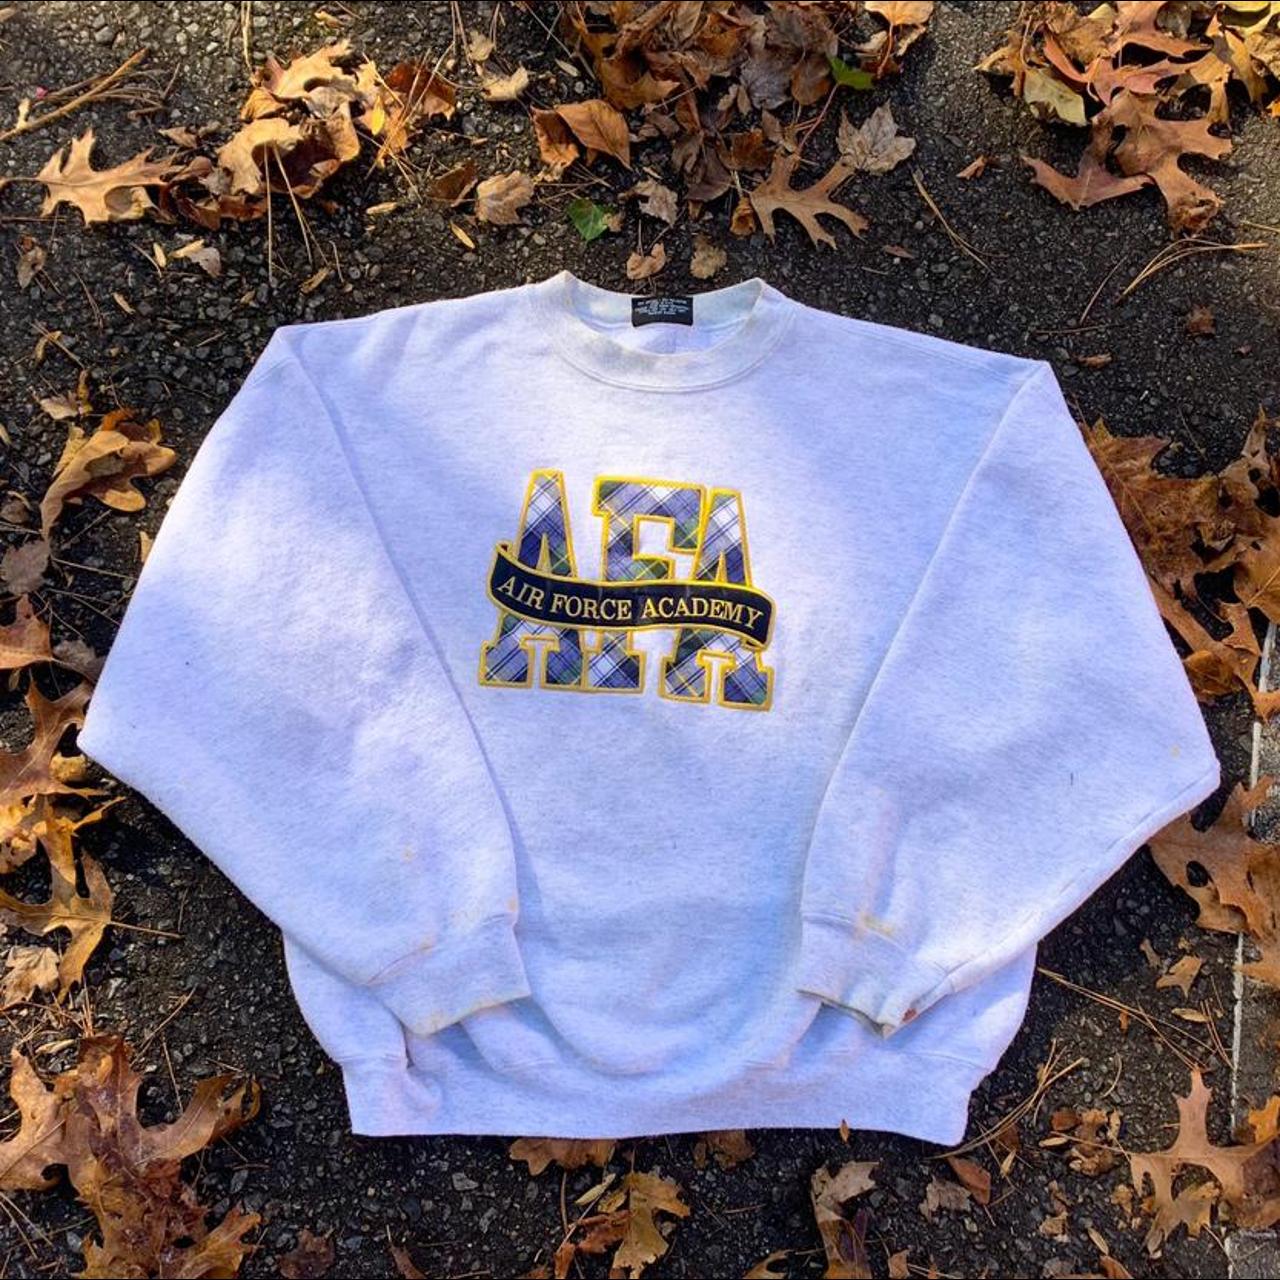 Product Image 1 - Vintage Air Force College Sweatshirt

90s